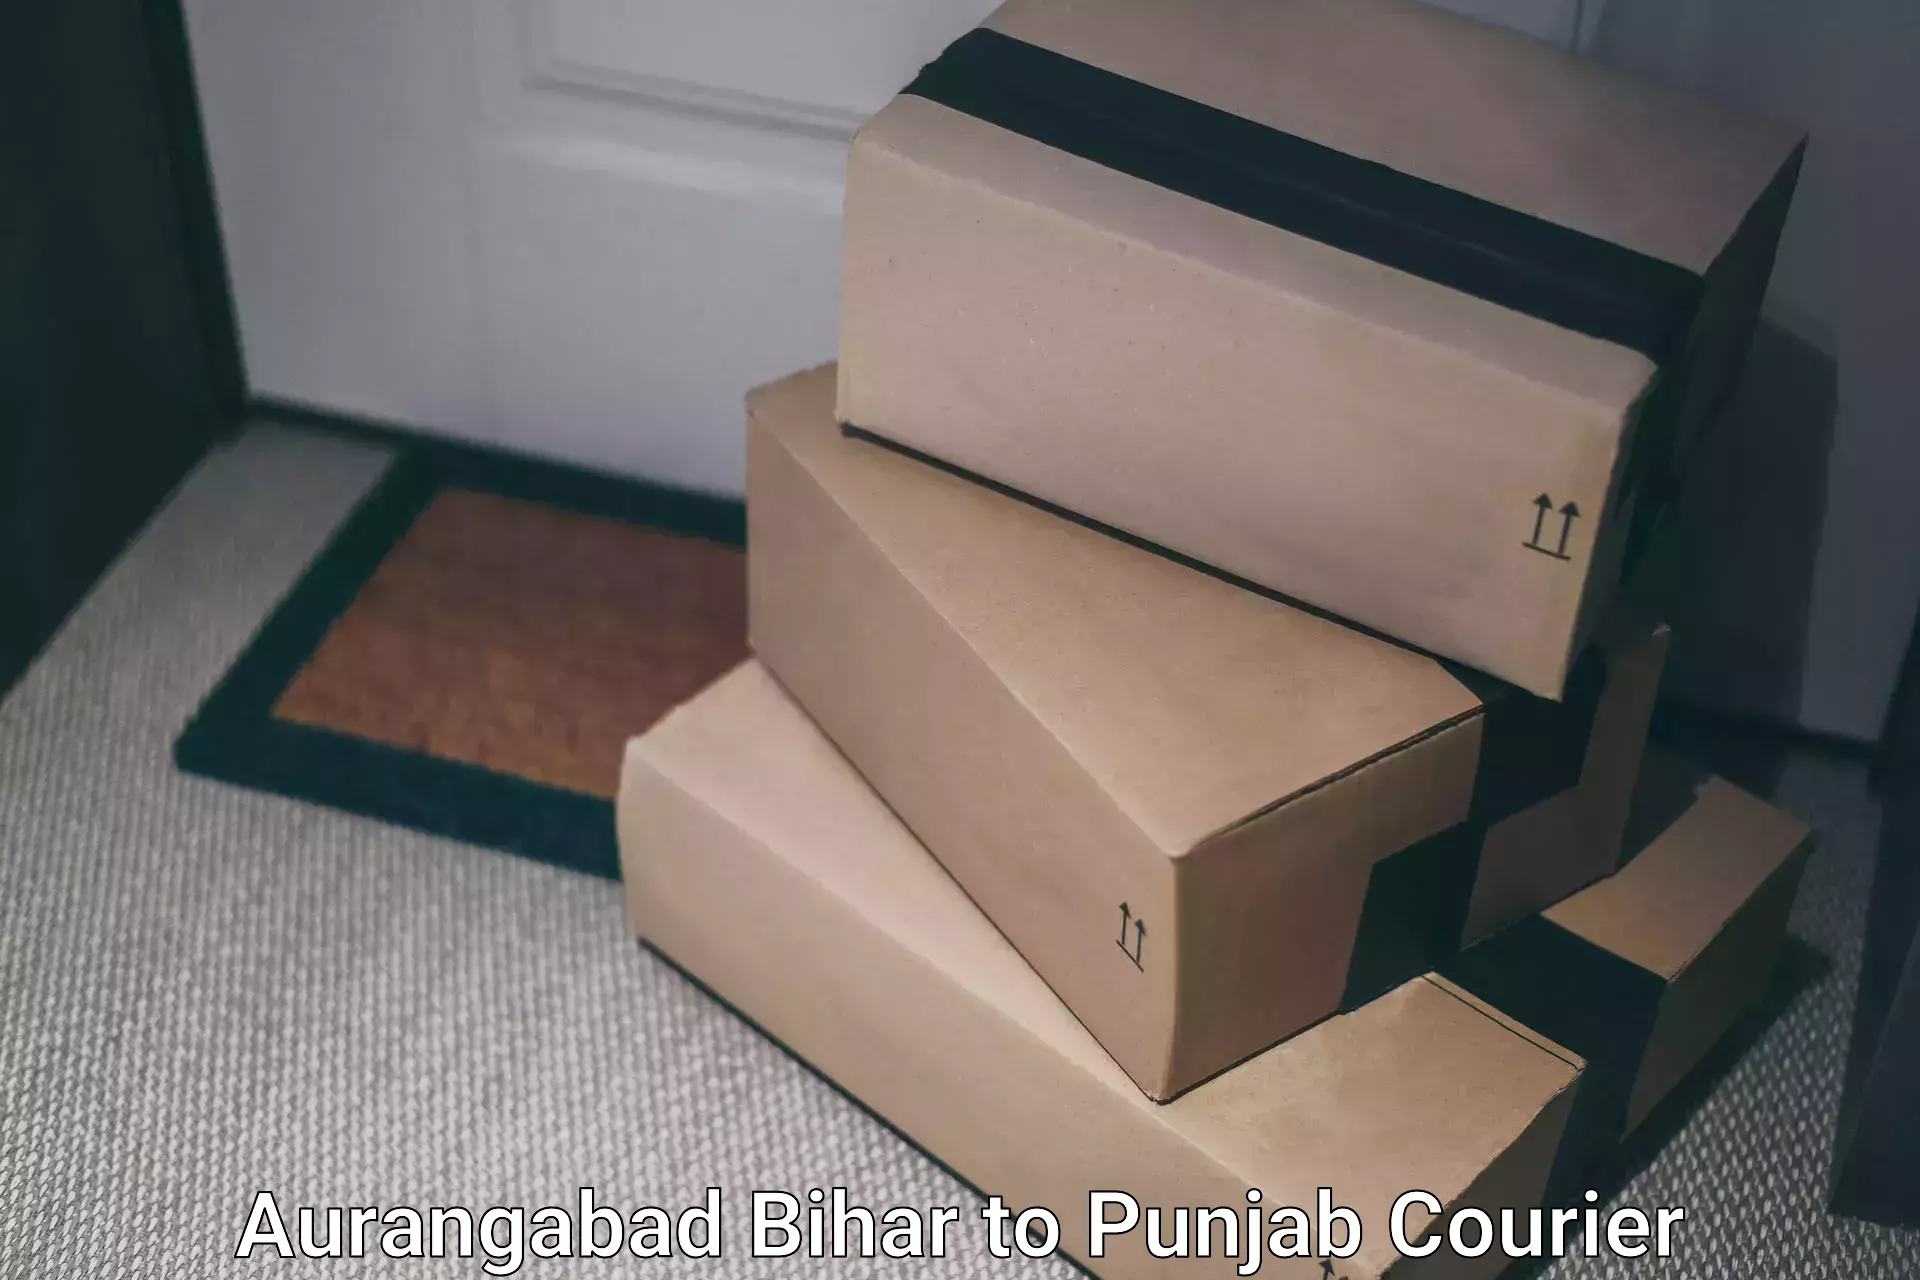 Express courier capabilities in Aurangabad Bihar to Punjab